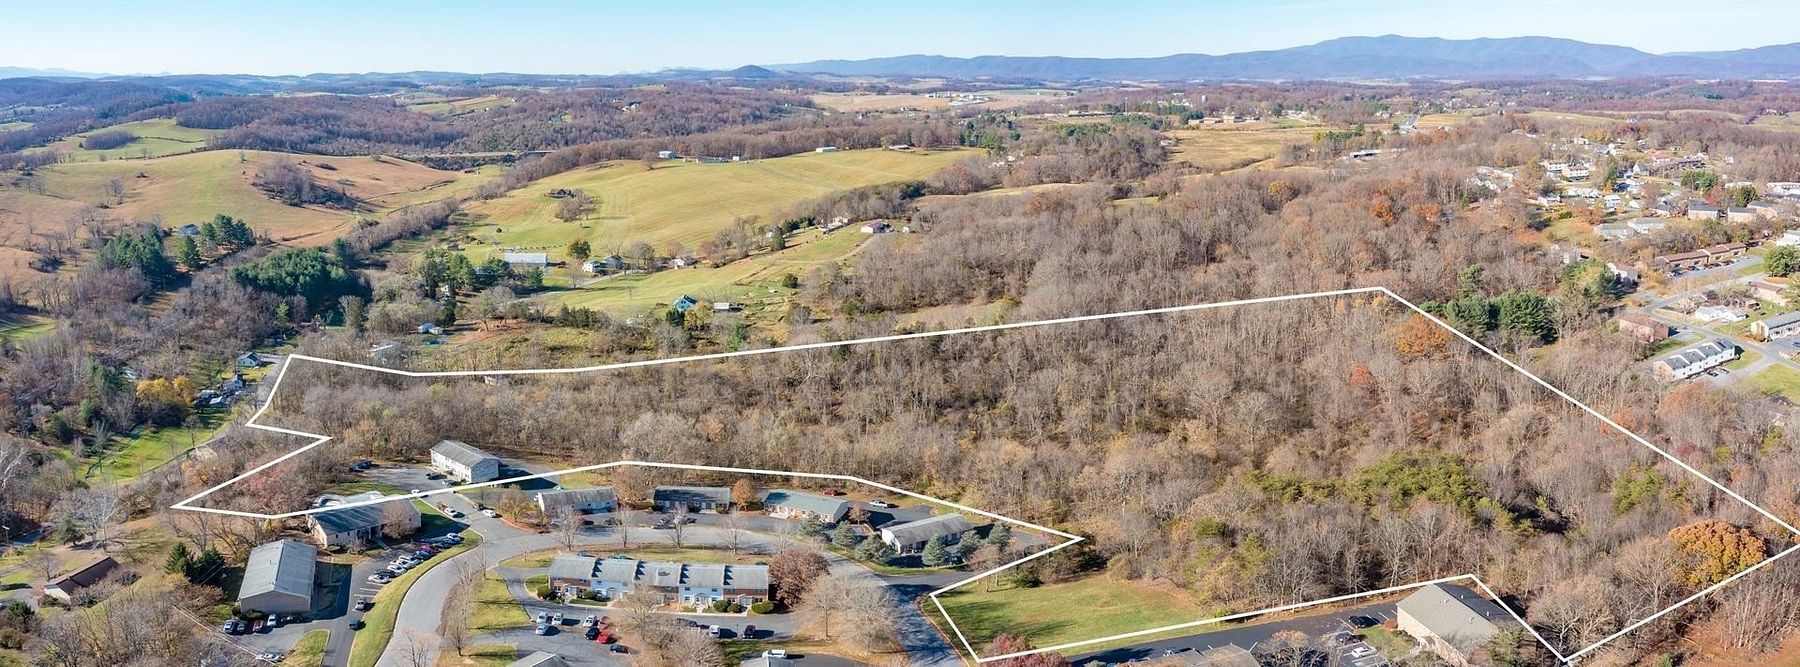 14.5 Acres of Land for Sale in Staunton, Virginia